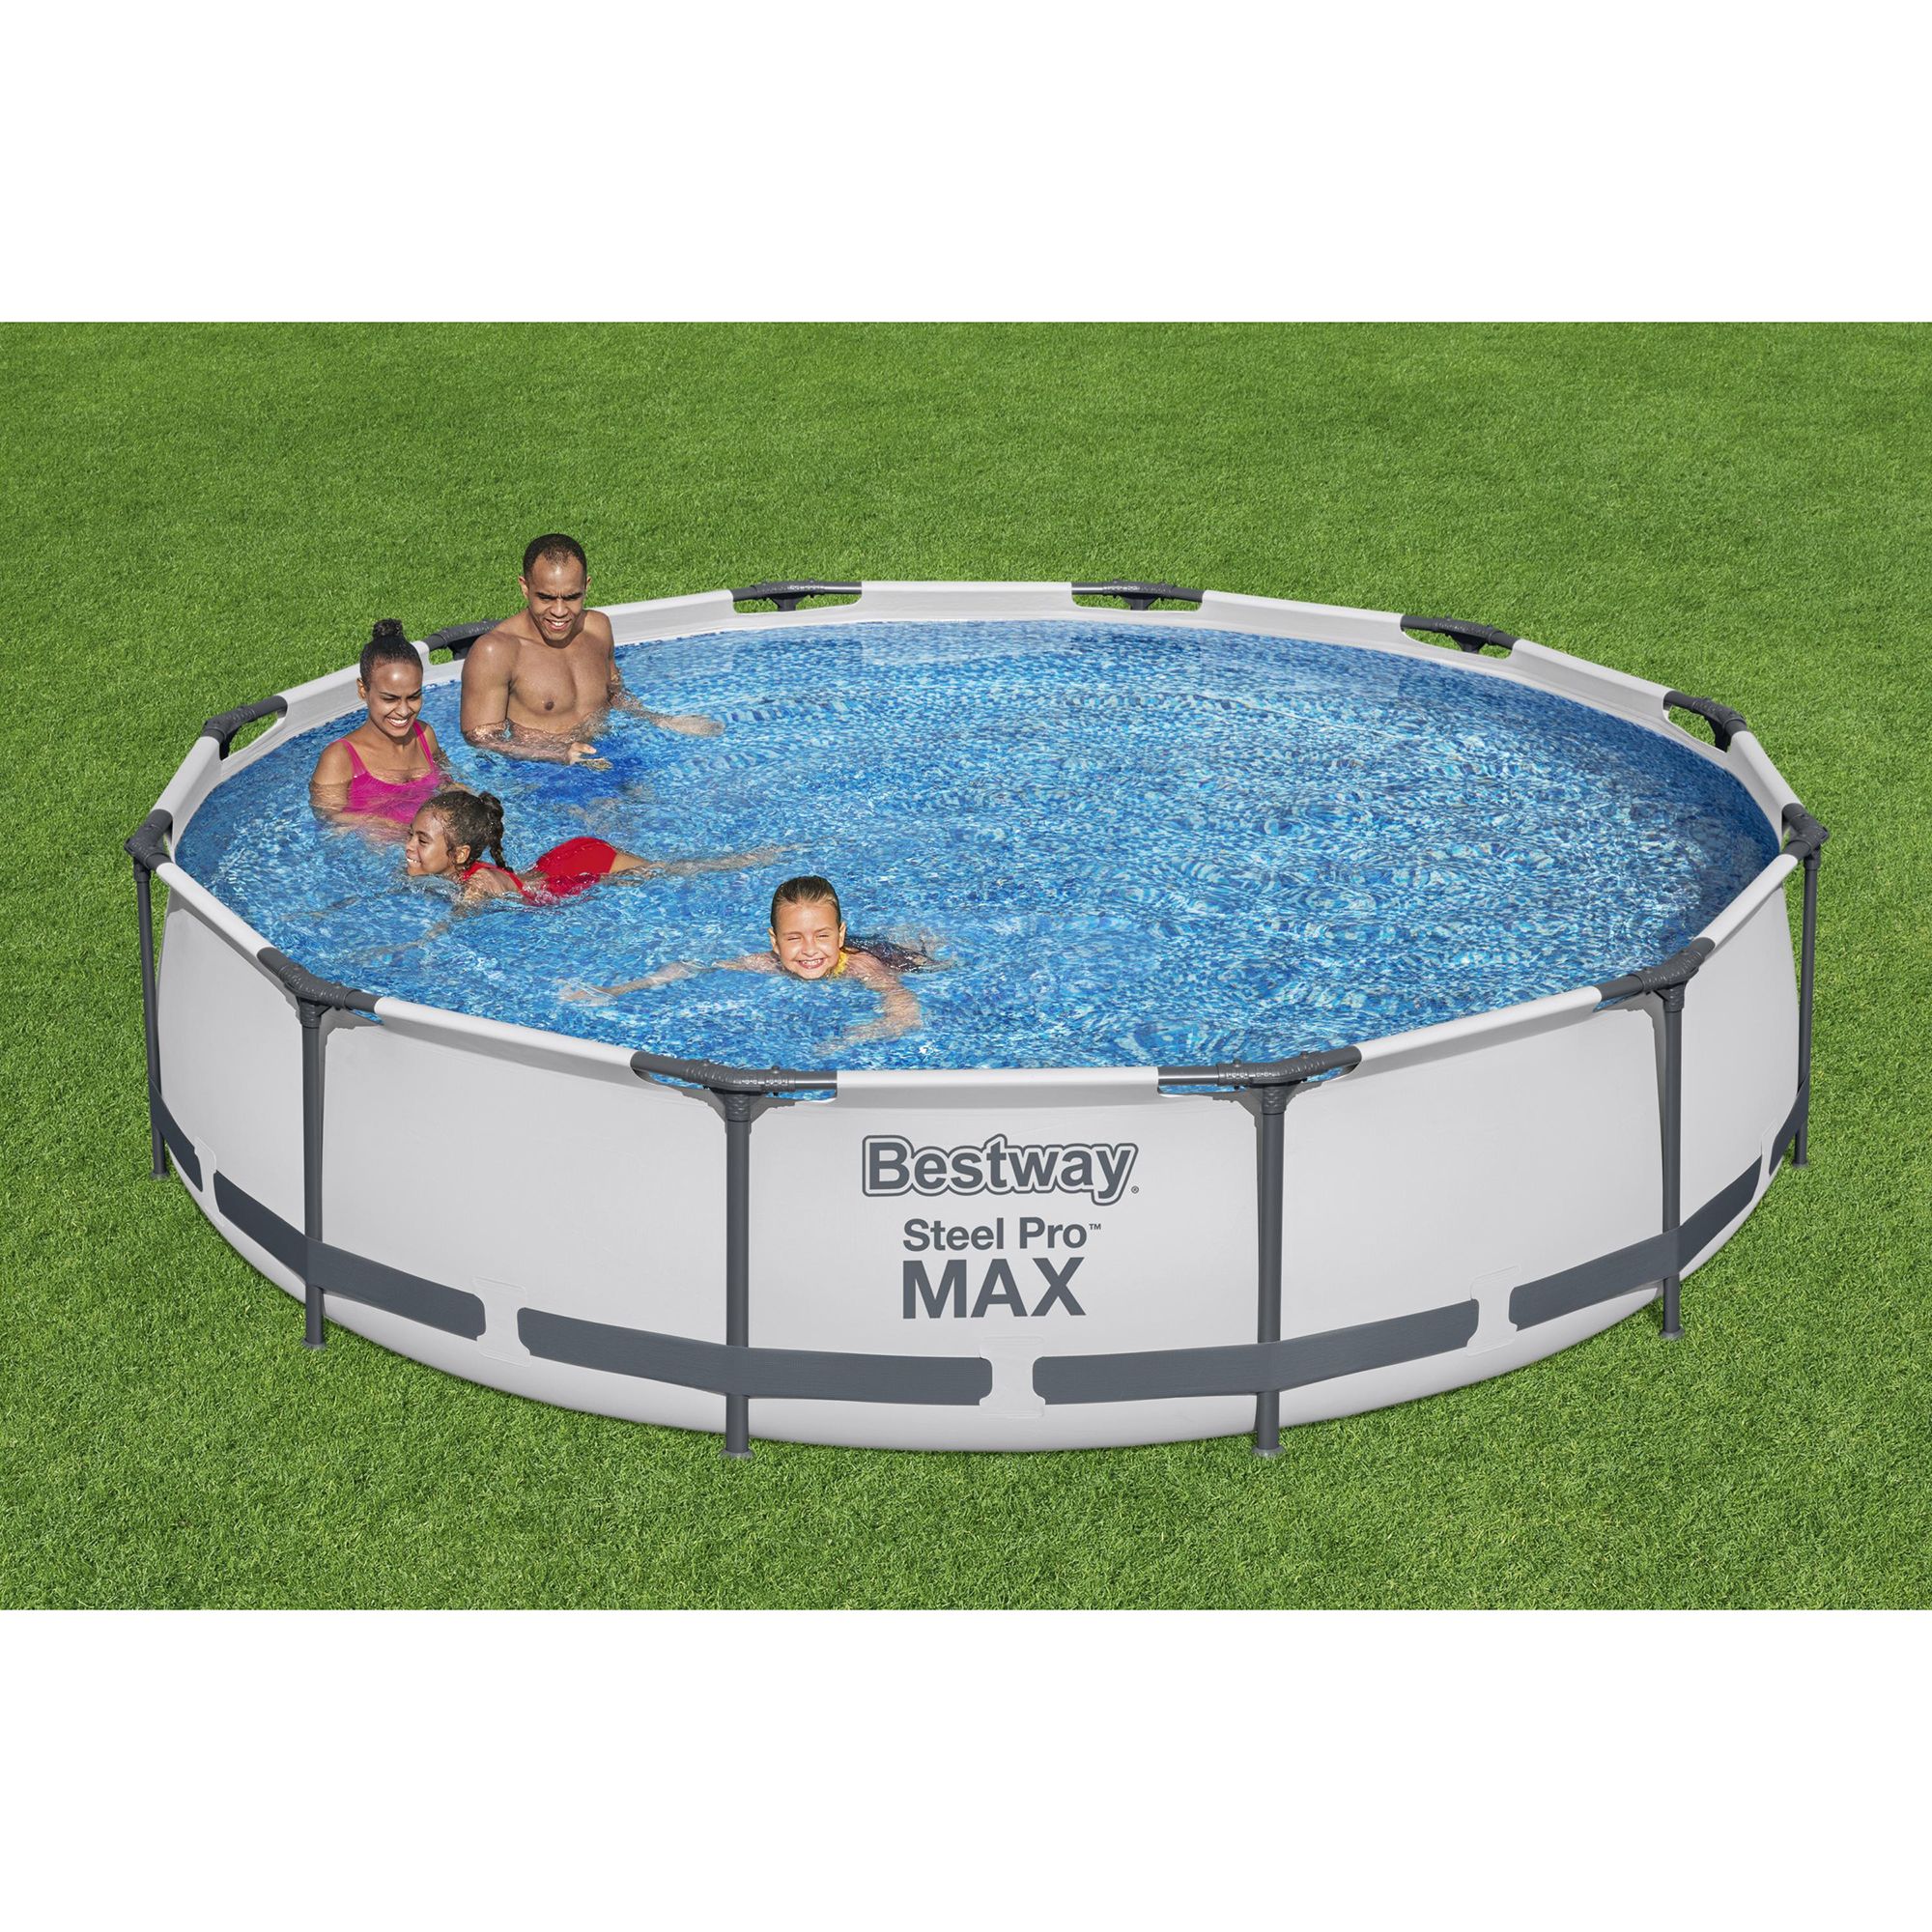 Bestway Steel Pro MAX 12' x 30&quot; Round Above Ground Pool Set